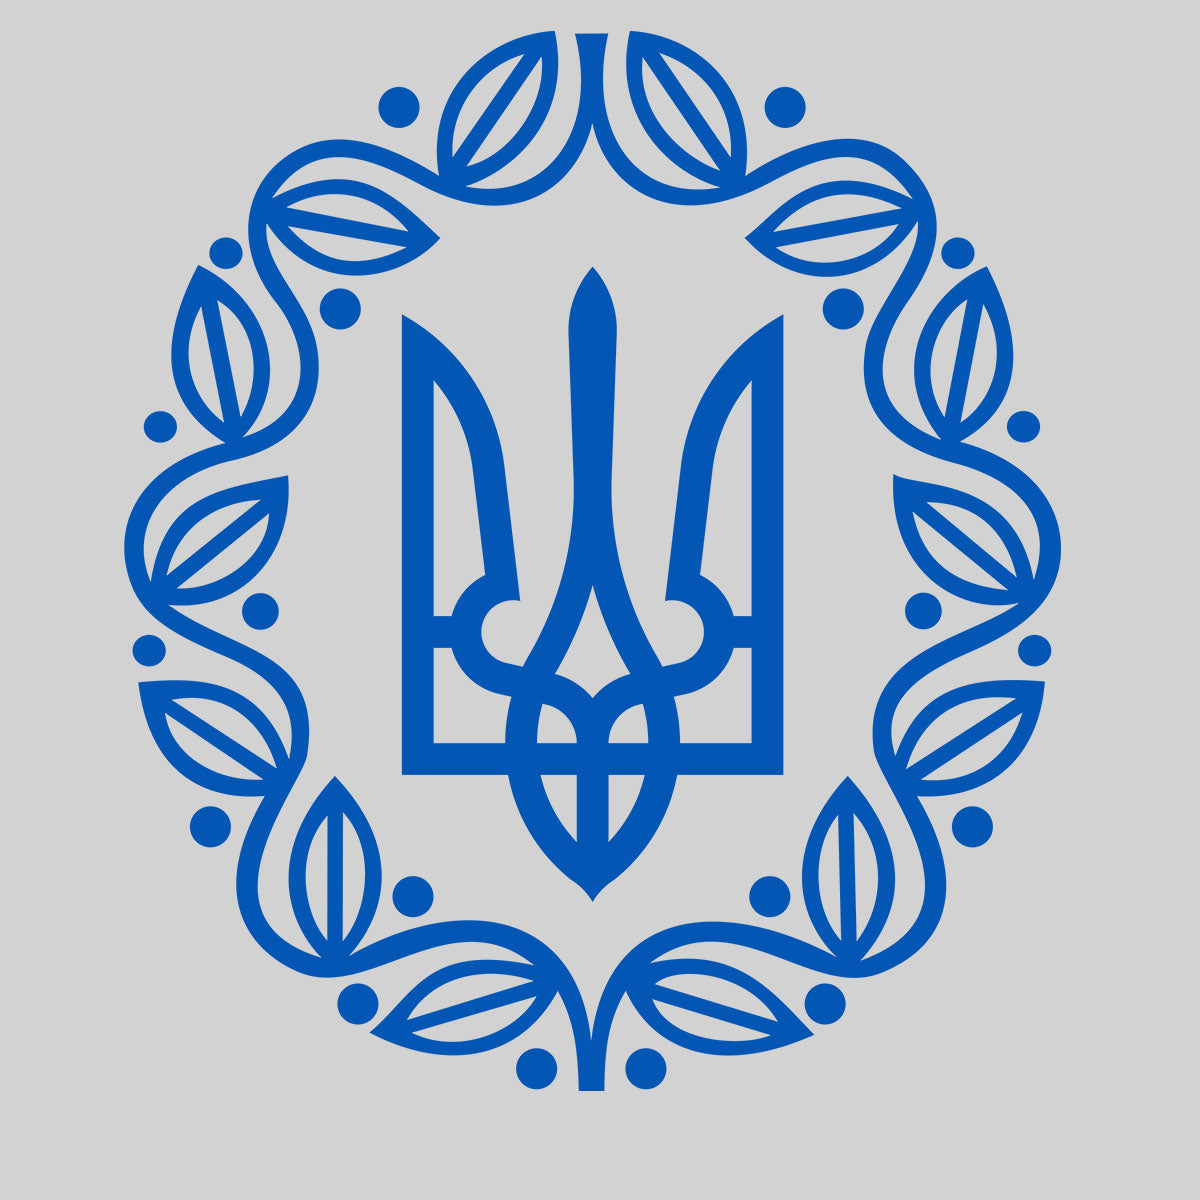 Symbol of Ukraine T-shirt Ukrainian People's Republic Tee - Kuzi Tees